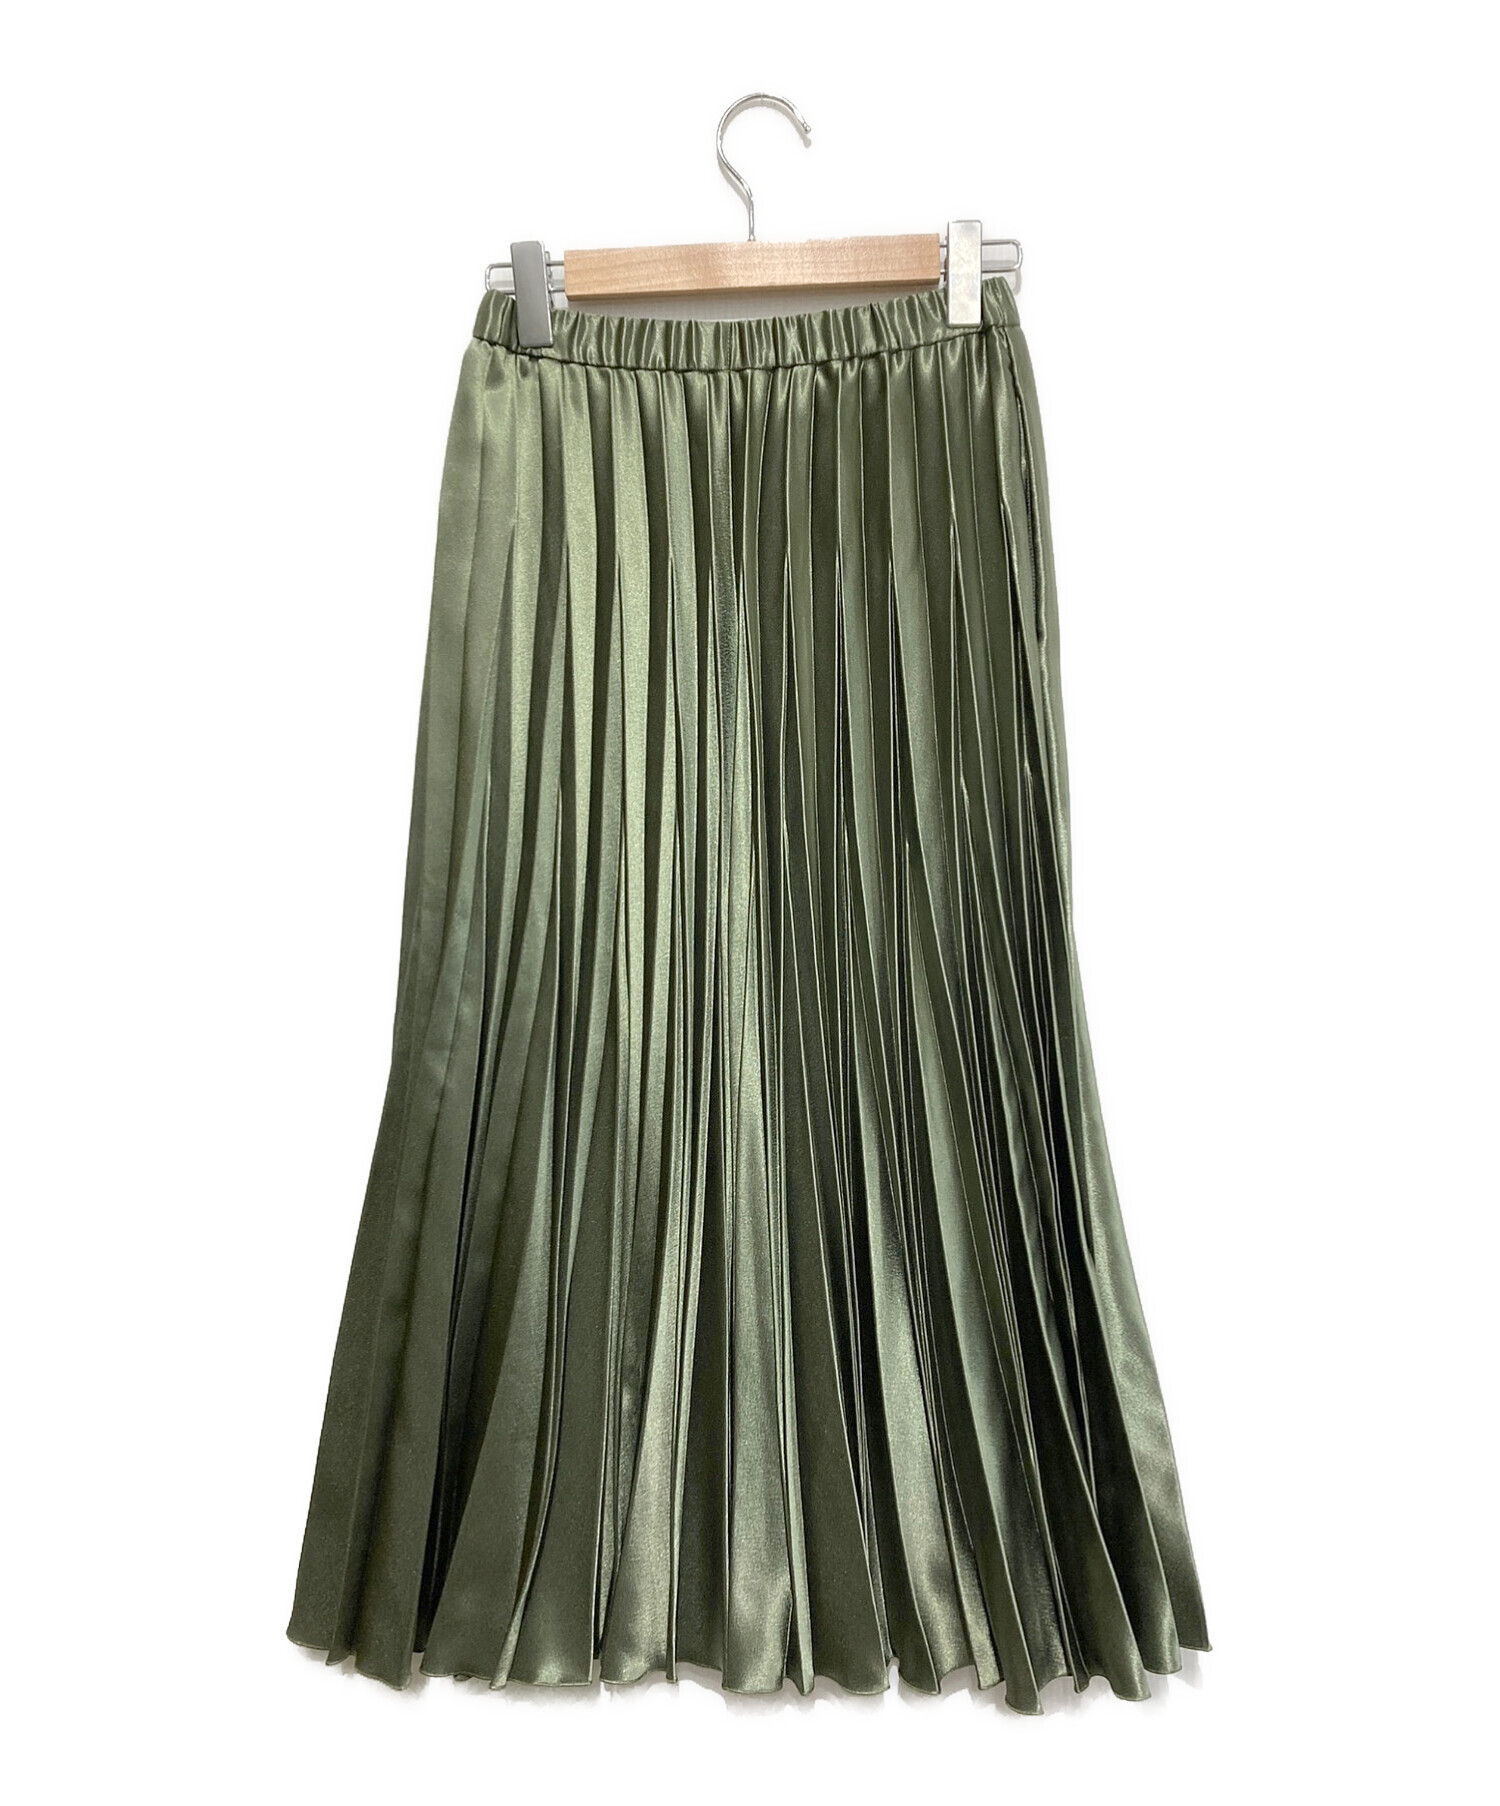 UN3D. (アンスリード) オリガミプリーツスカート グリーン サイズ:SIZE 38